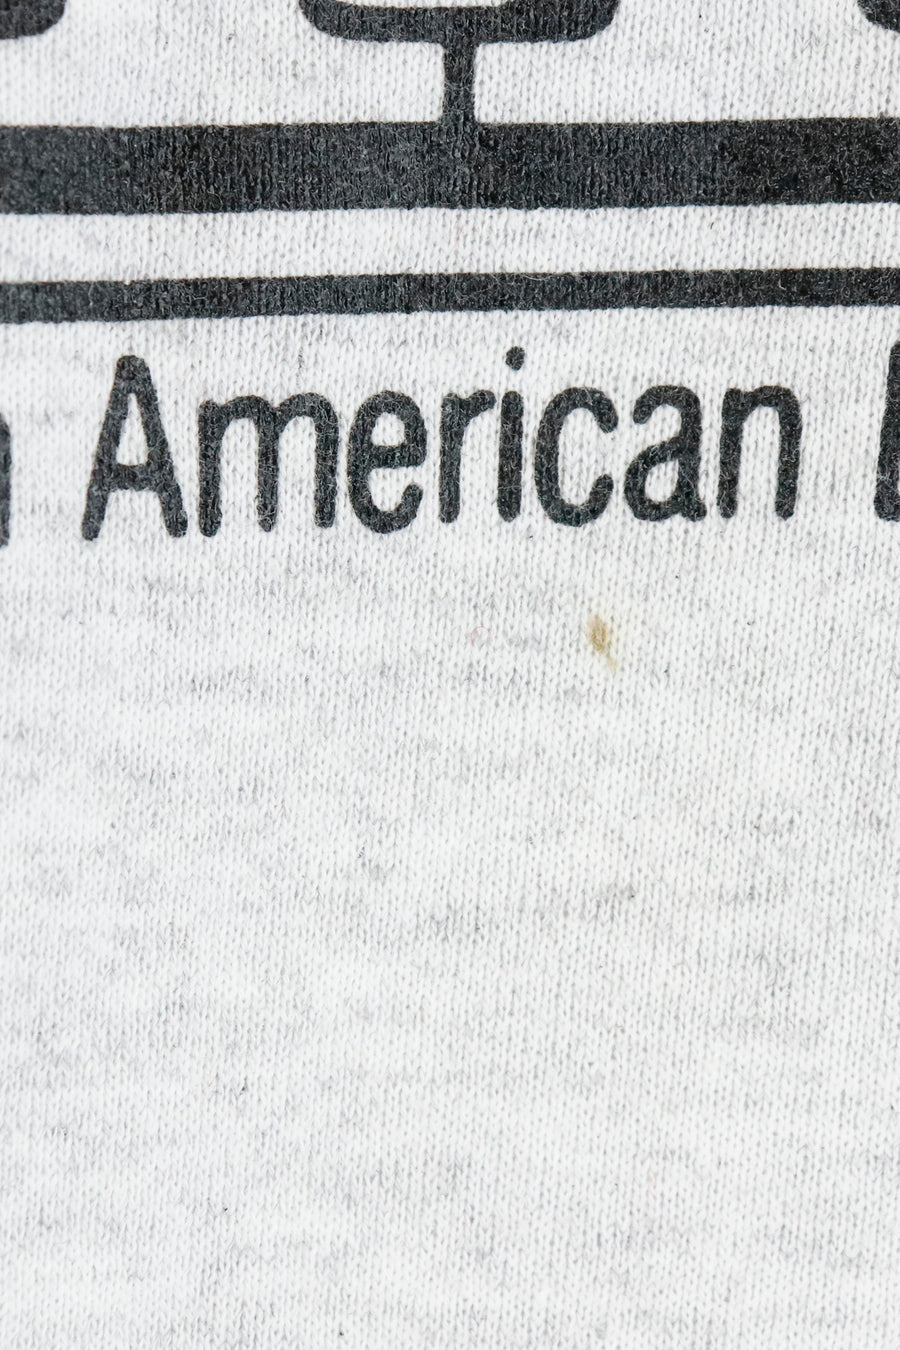 Vintage IDS An American Expresss Company Sweatshirt Sz L